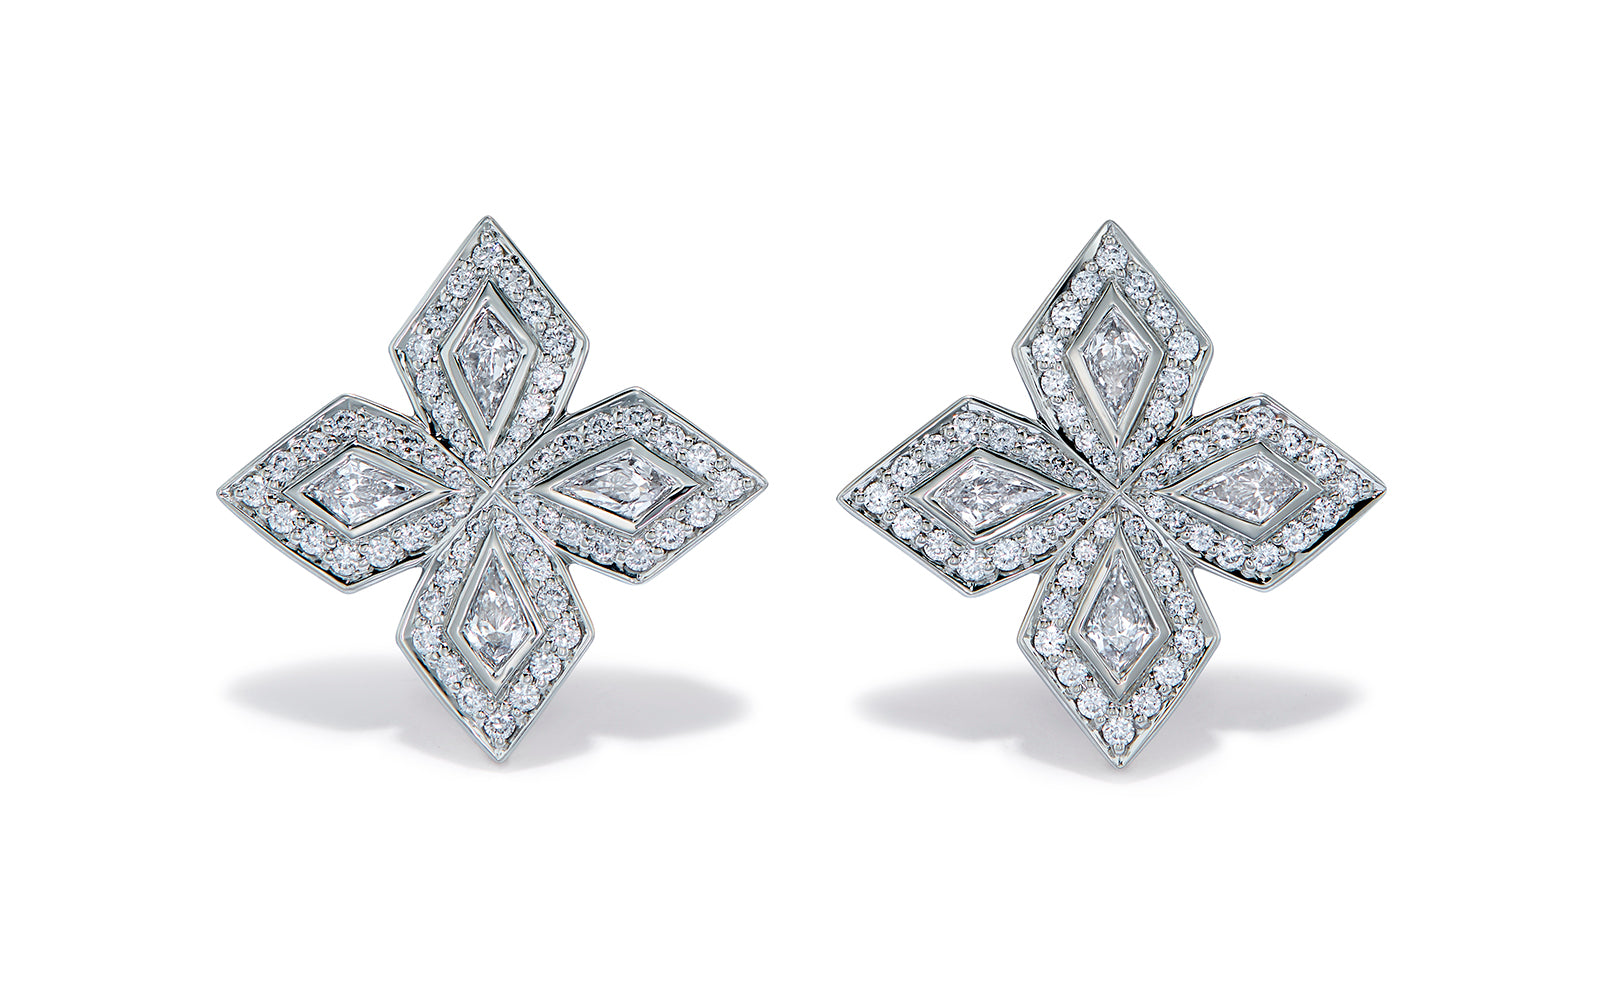 Classic Kite 1.36ct D Flawless Diamond Earrings set in Platinum